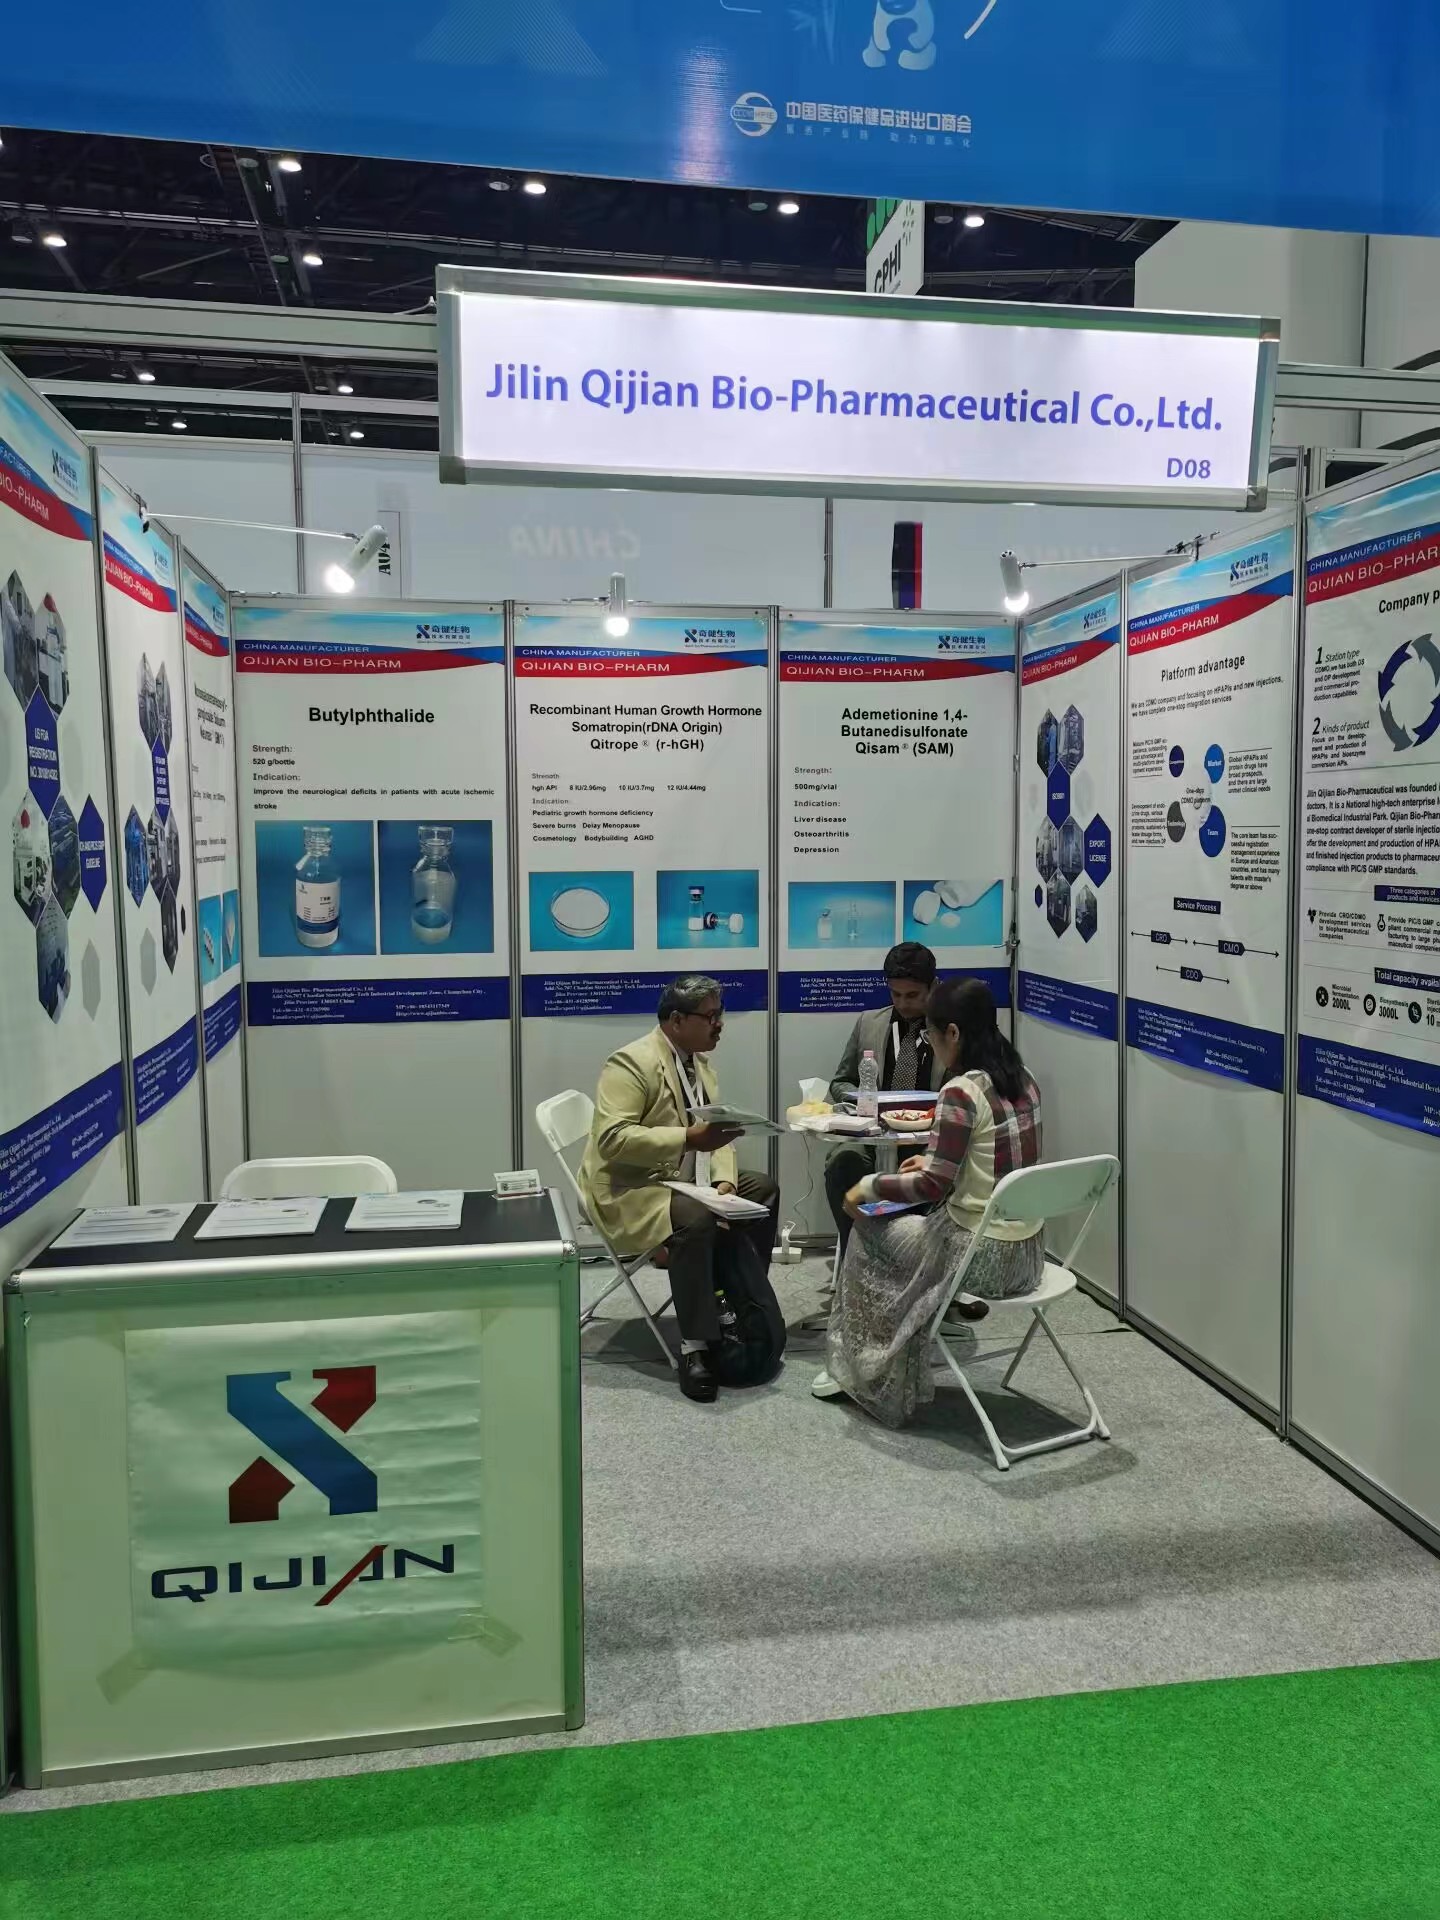 Jilin Qijian Bio-Pharmaceutical Co., Ltd. participated in the 2023CPHI Southeast Asia Exhibition